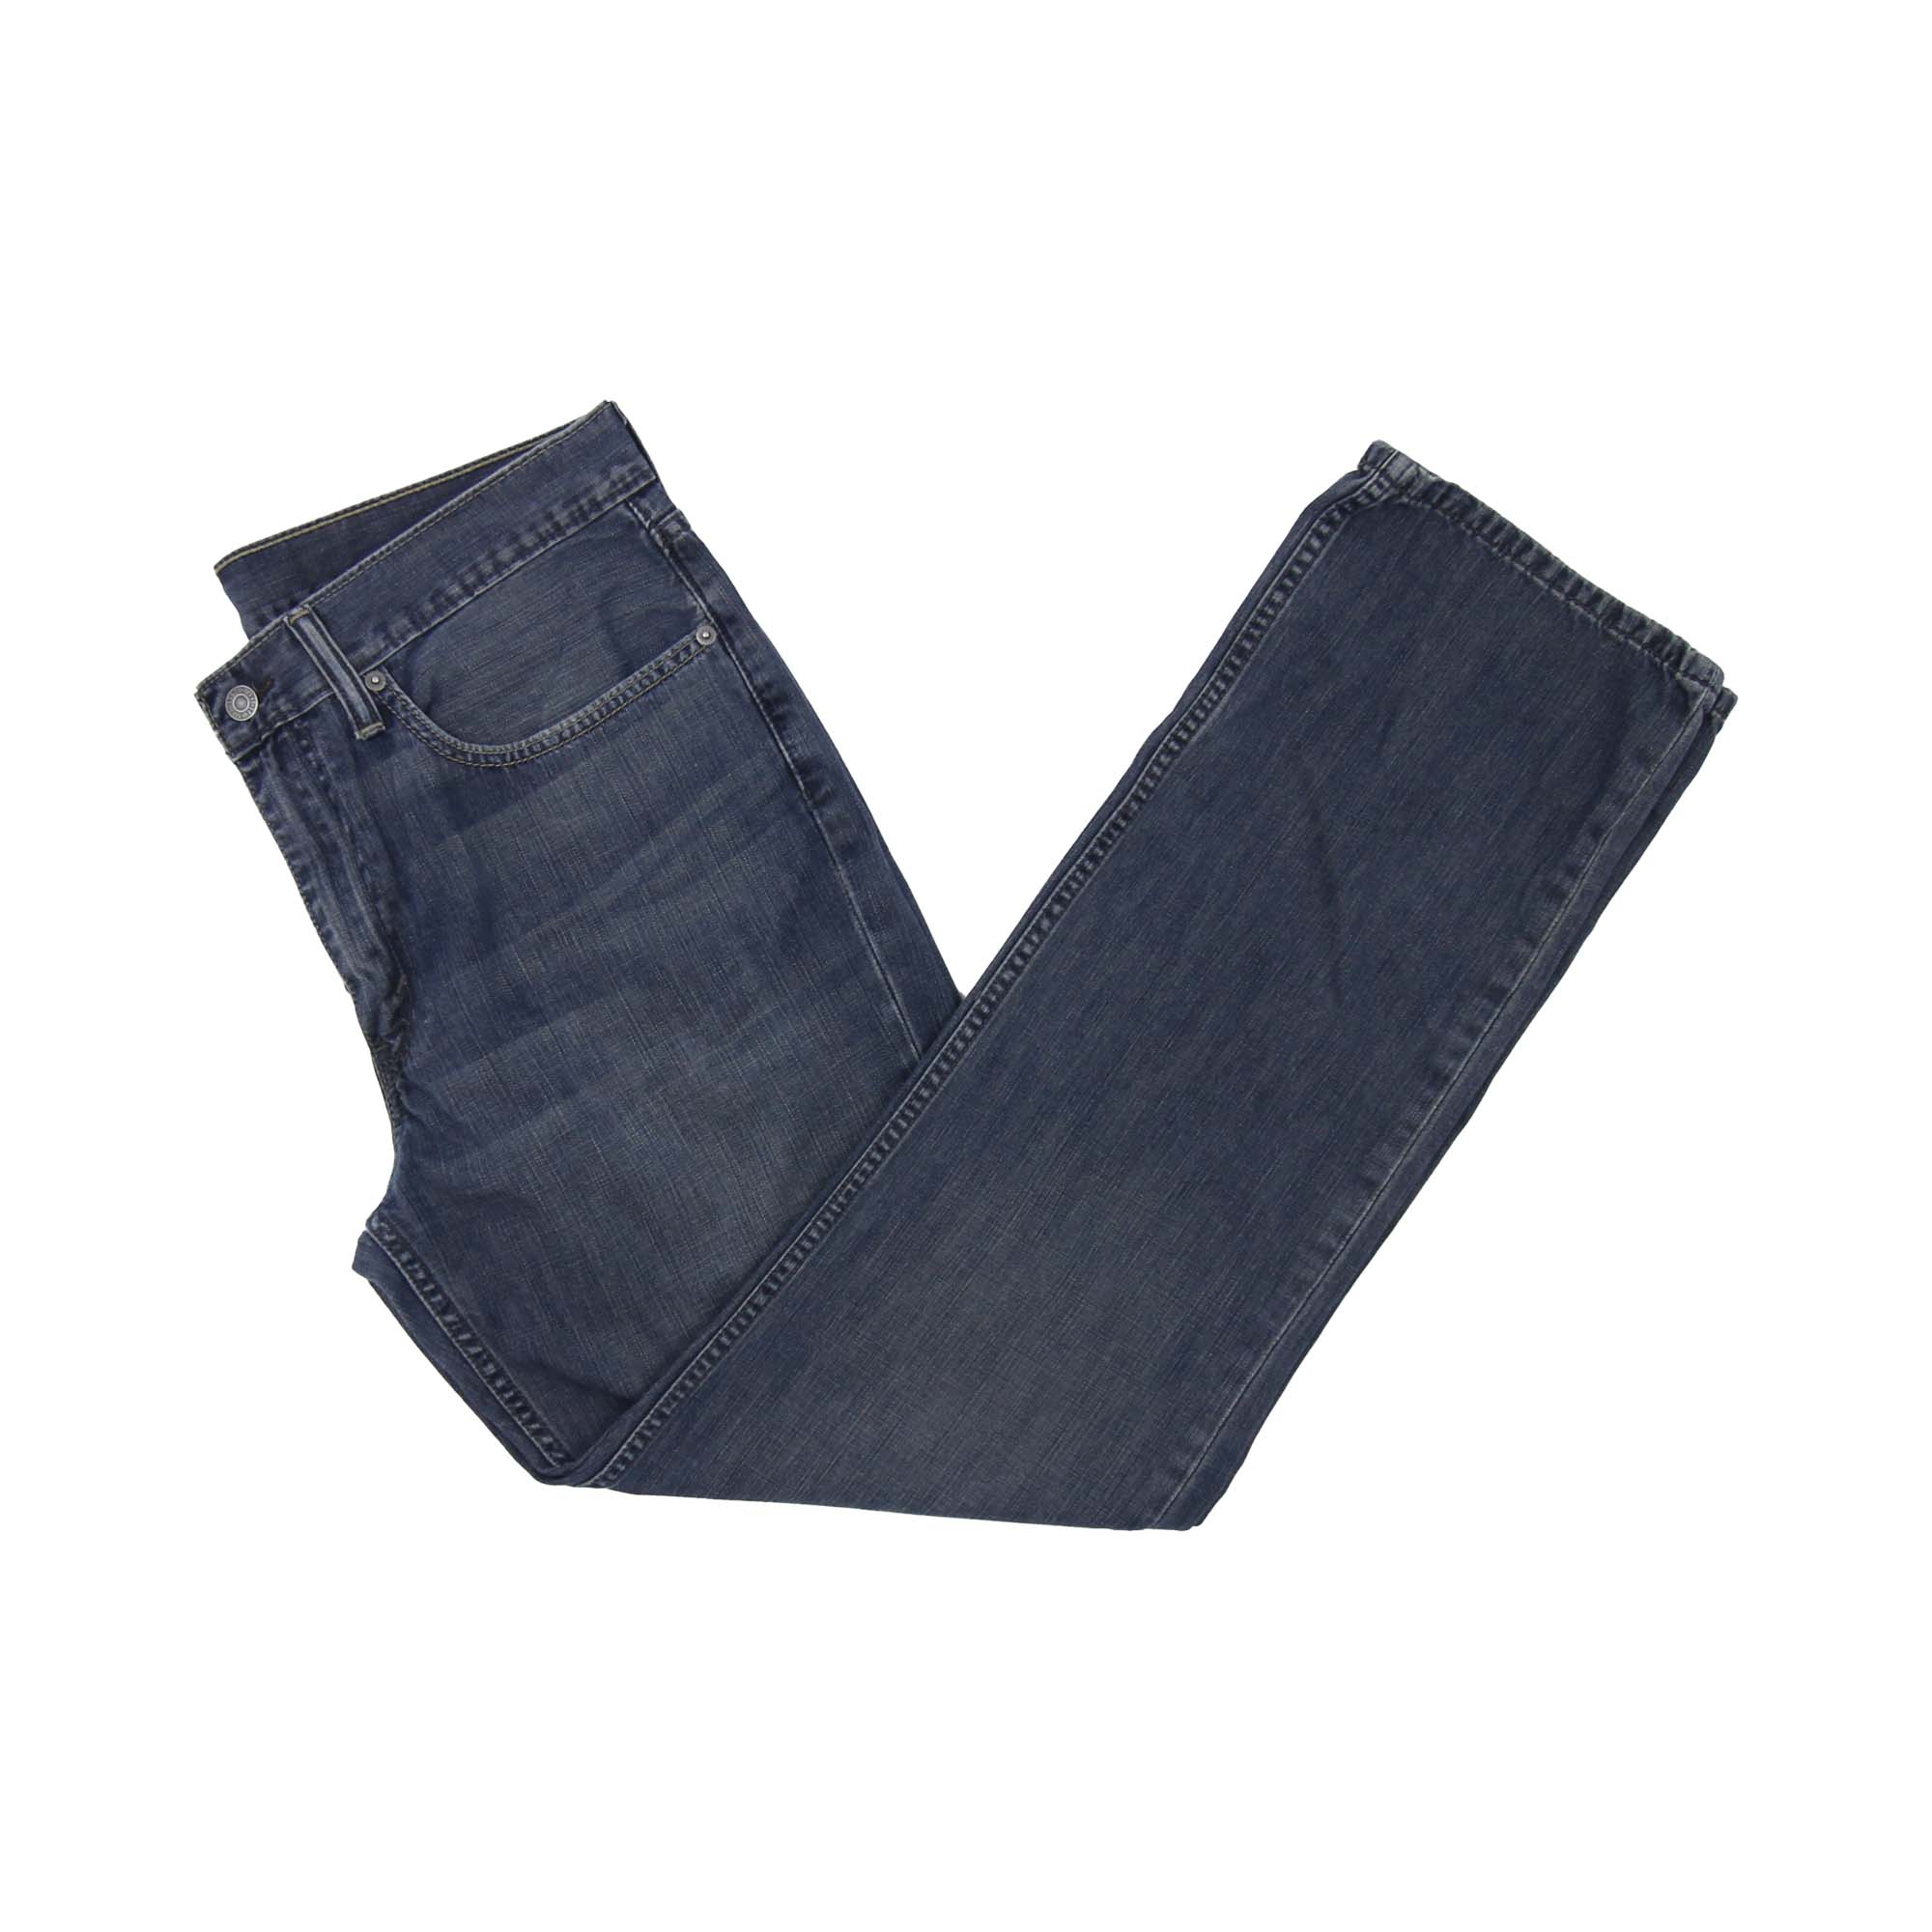 Levi's 514 Jeans  -   W34 L32